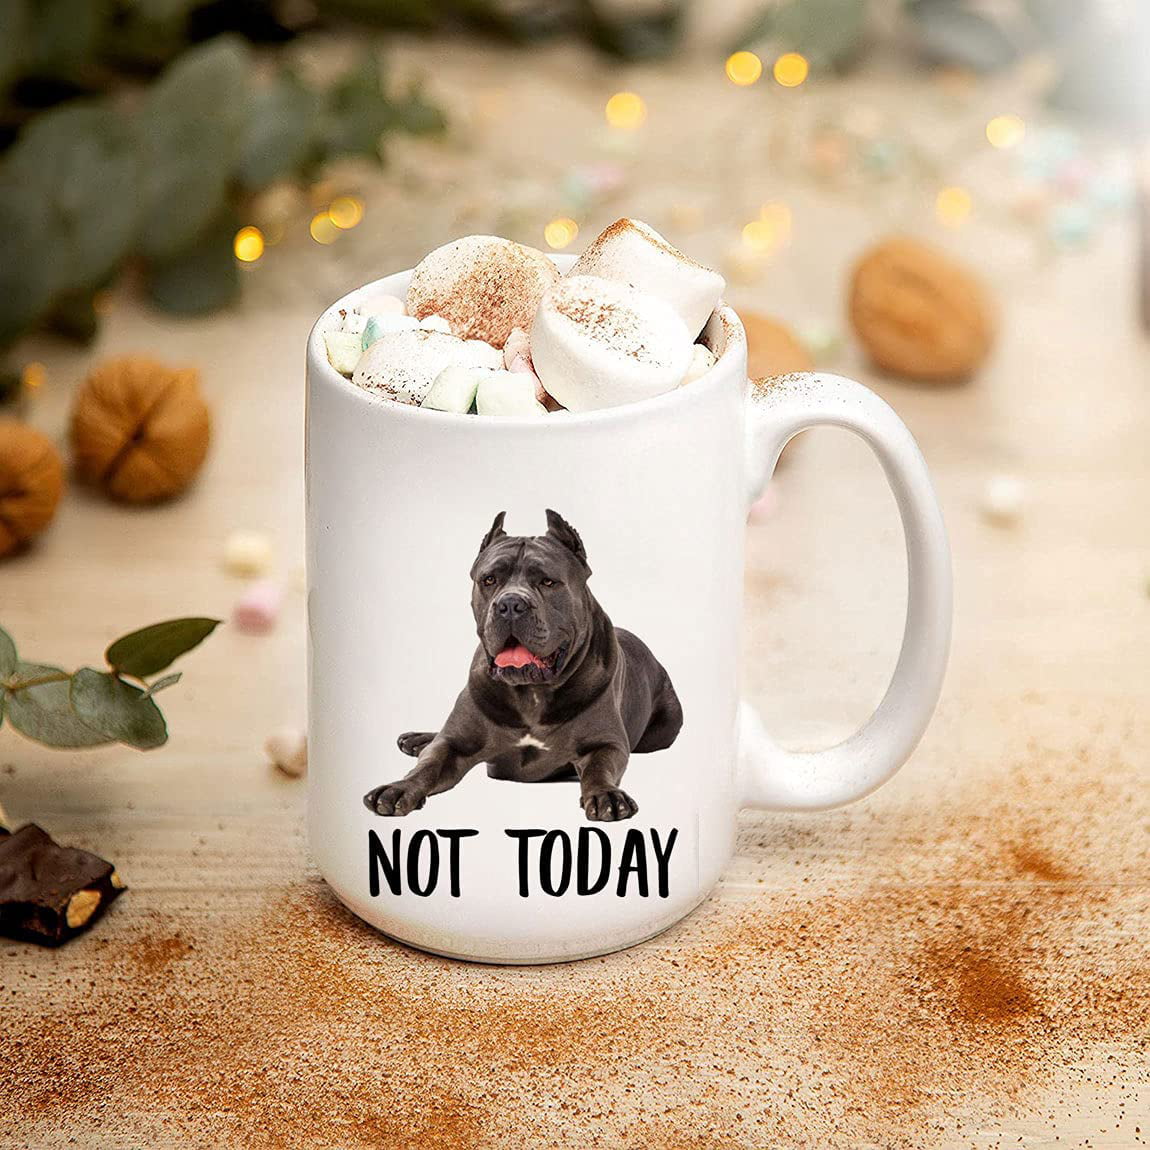 Beast Mode Coffee Mug or Cup, Fitness Coffee Cup or Mug Gift – Coffee Mugs  Never Lie